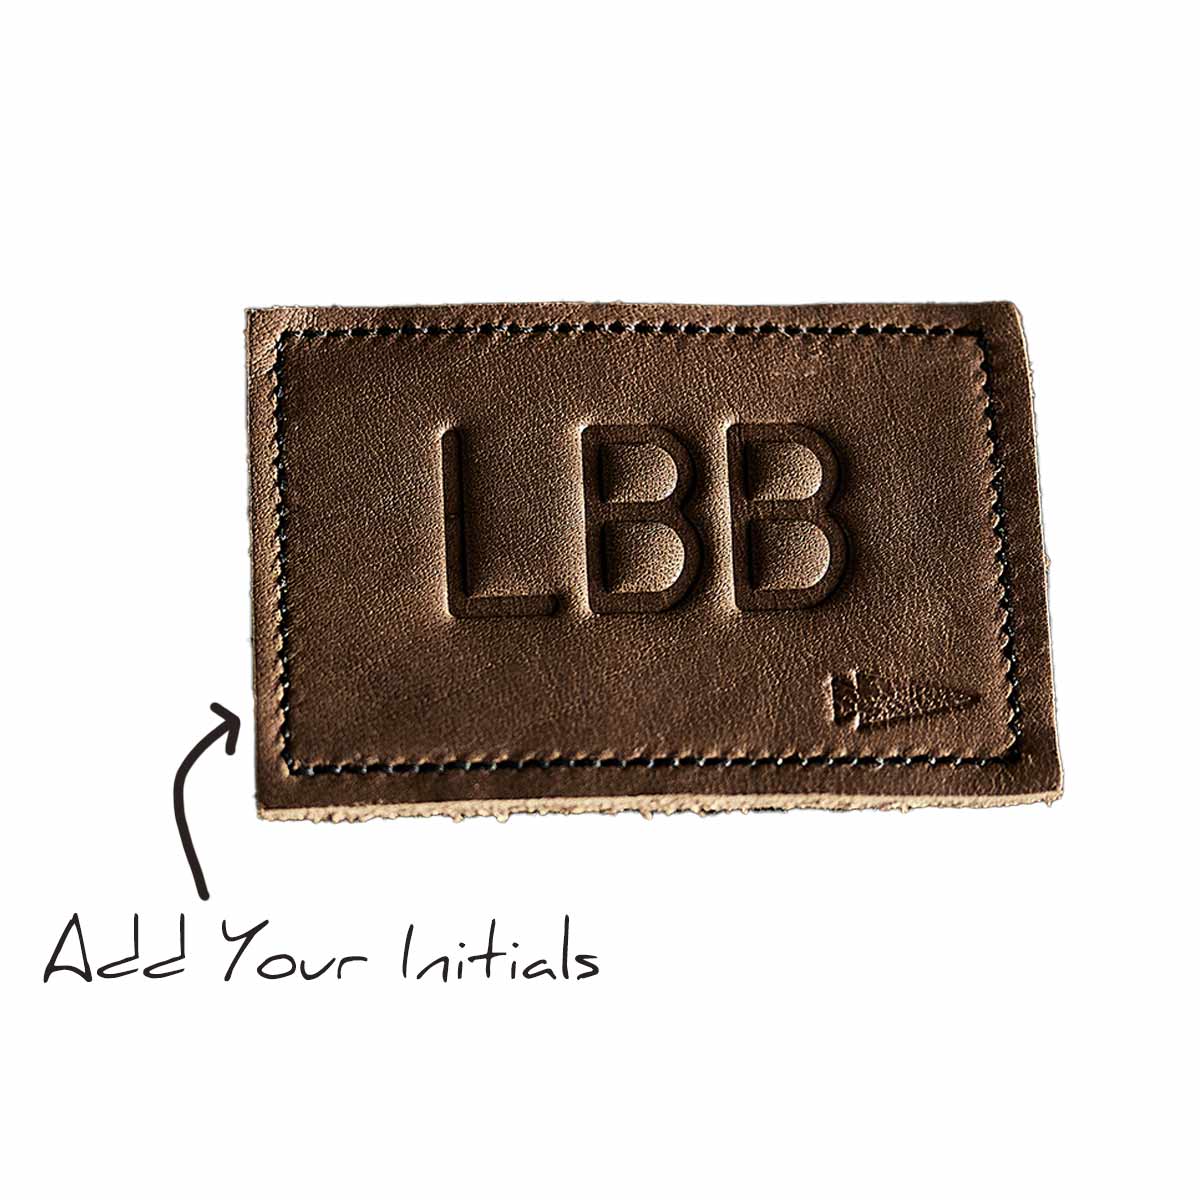 Patch  - Custom Leather Monogram